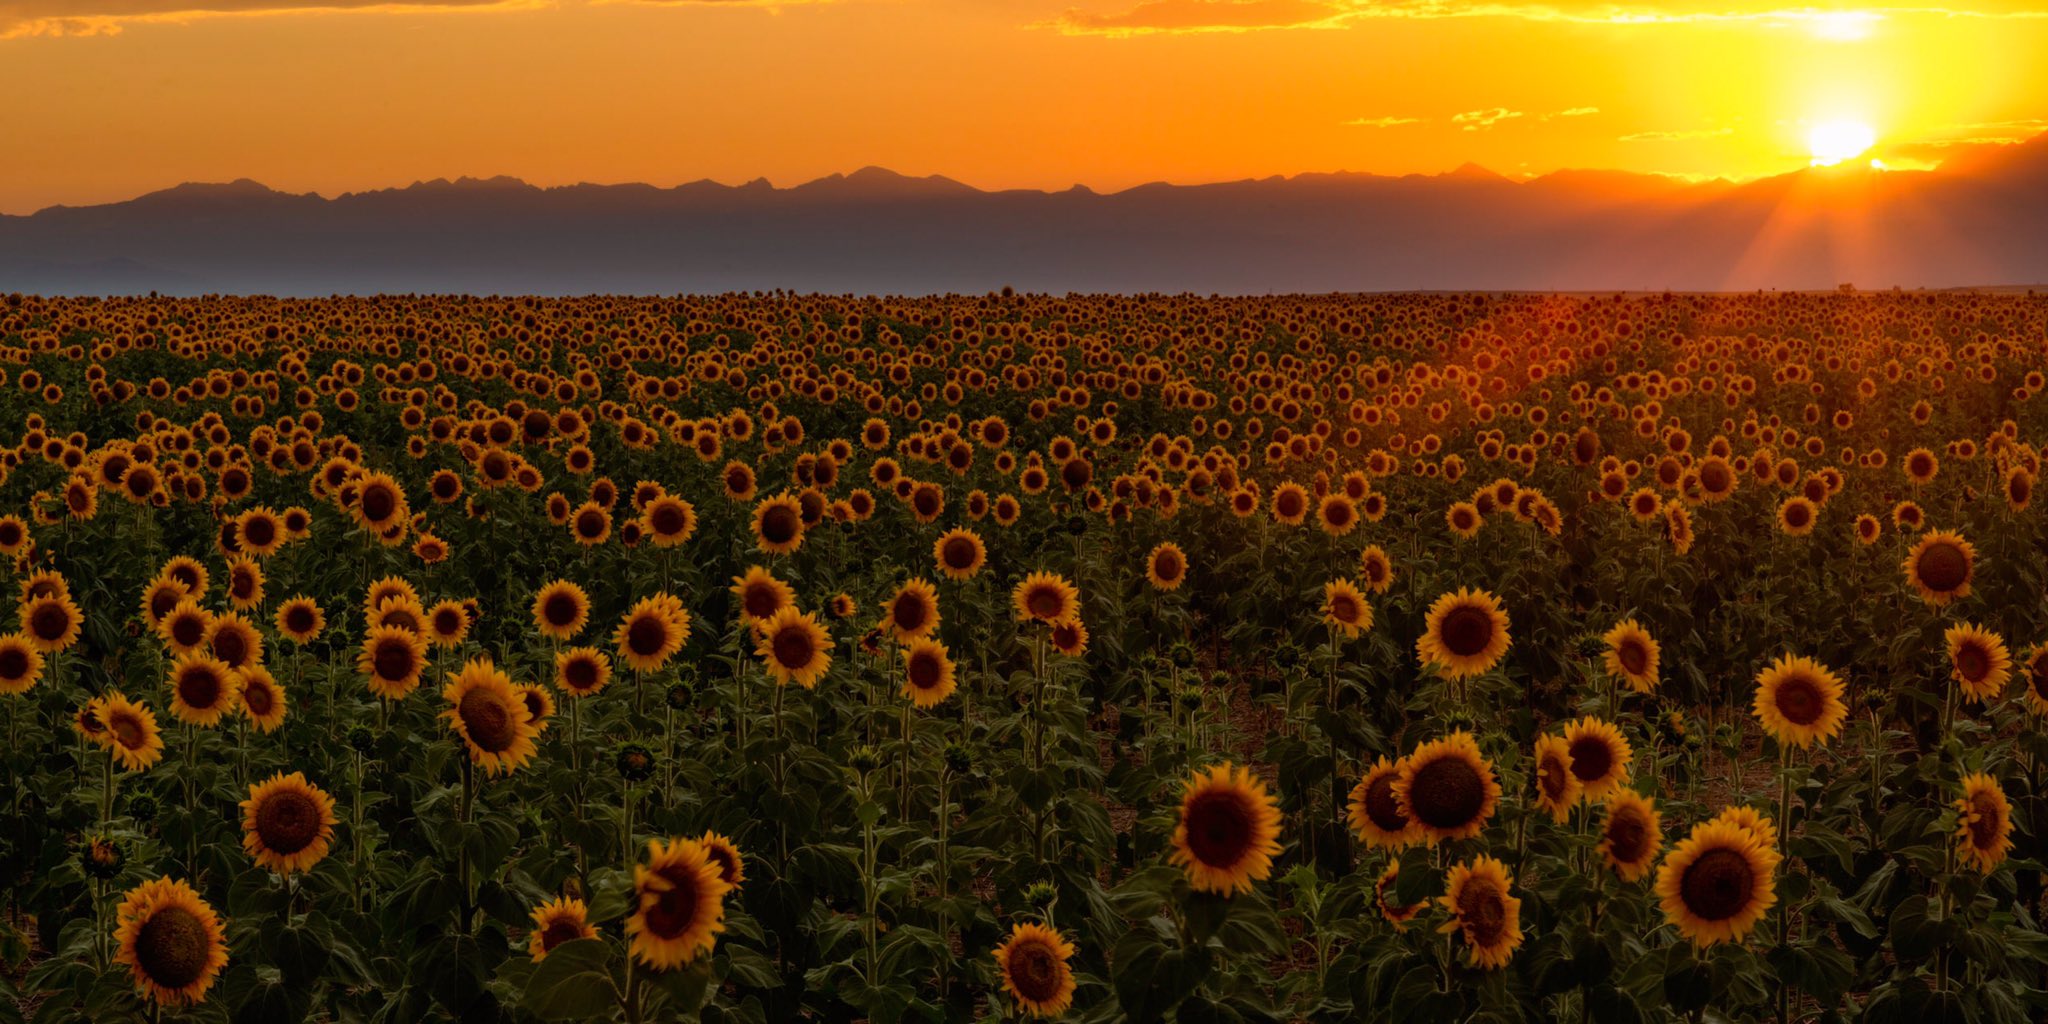 3rd Place Sunset over Sunflowers near Denver, Colorado by Michael Ryno @mnryno34